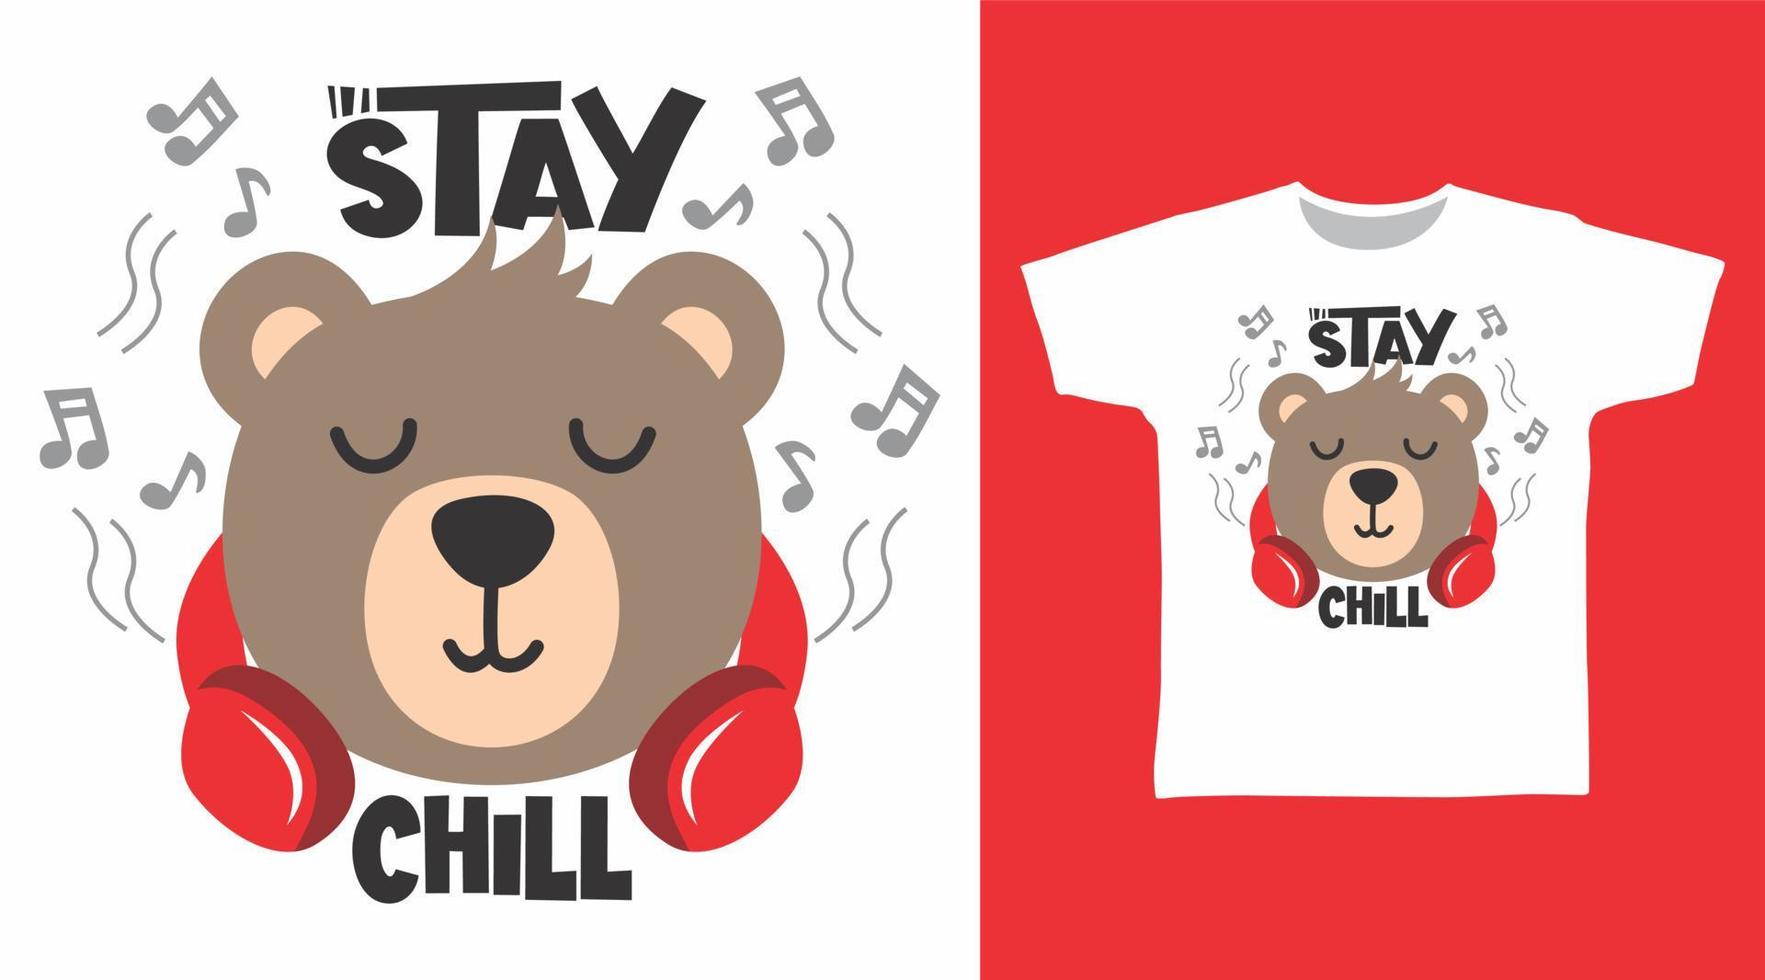 Cute bear with headphone design vector illustration ready for print on t-shirt.